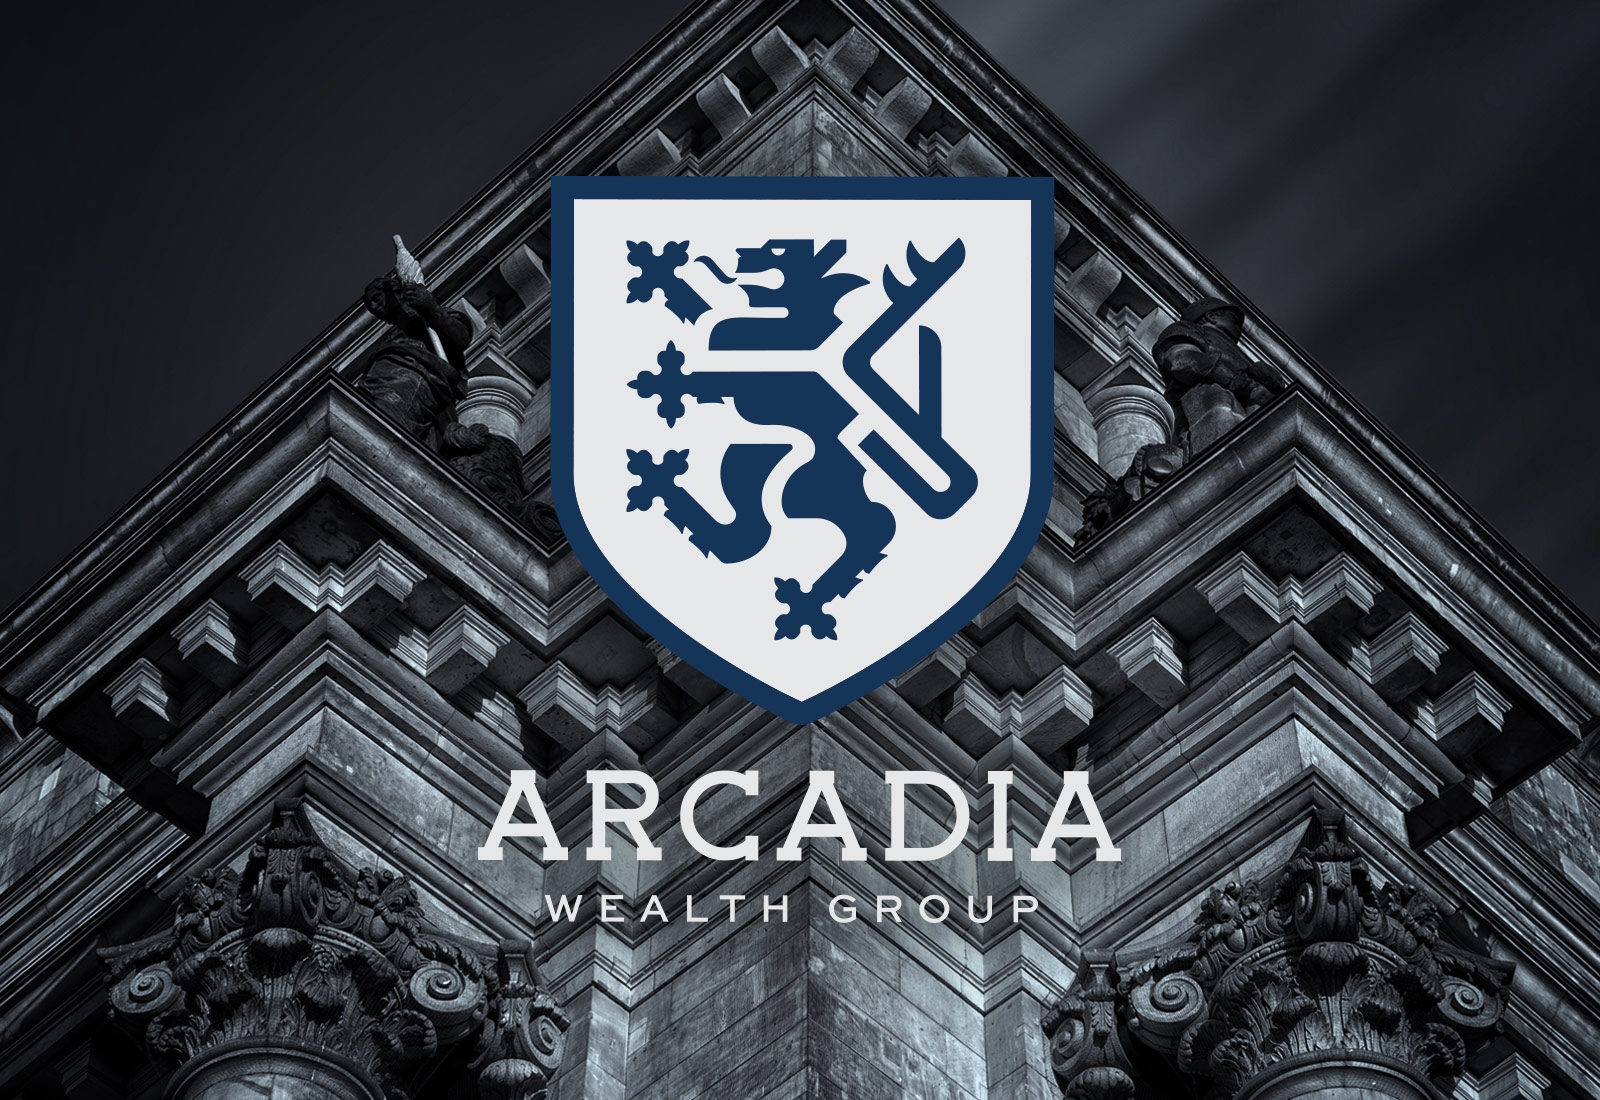 Arcadia Wealth Group Brand Image